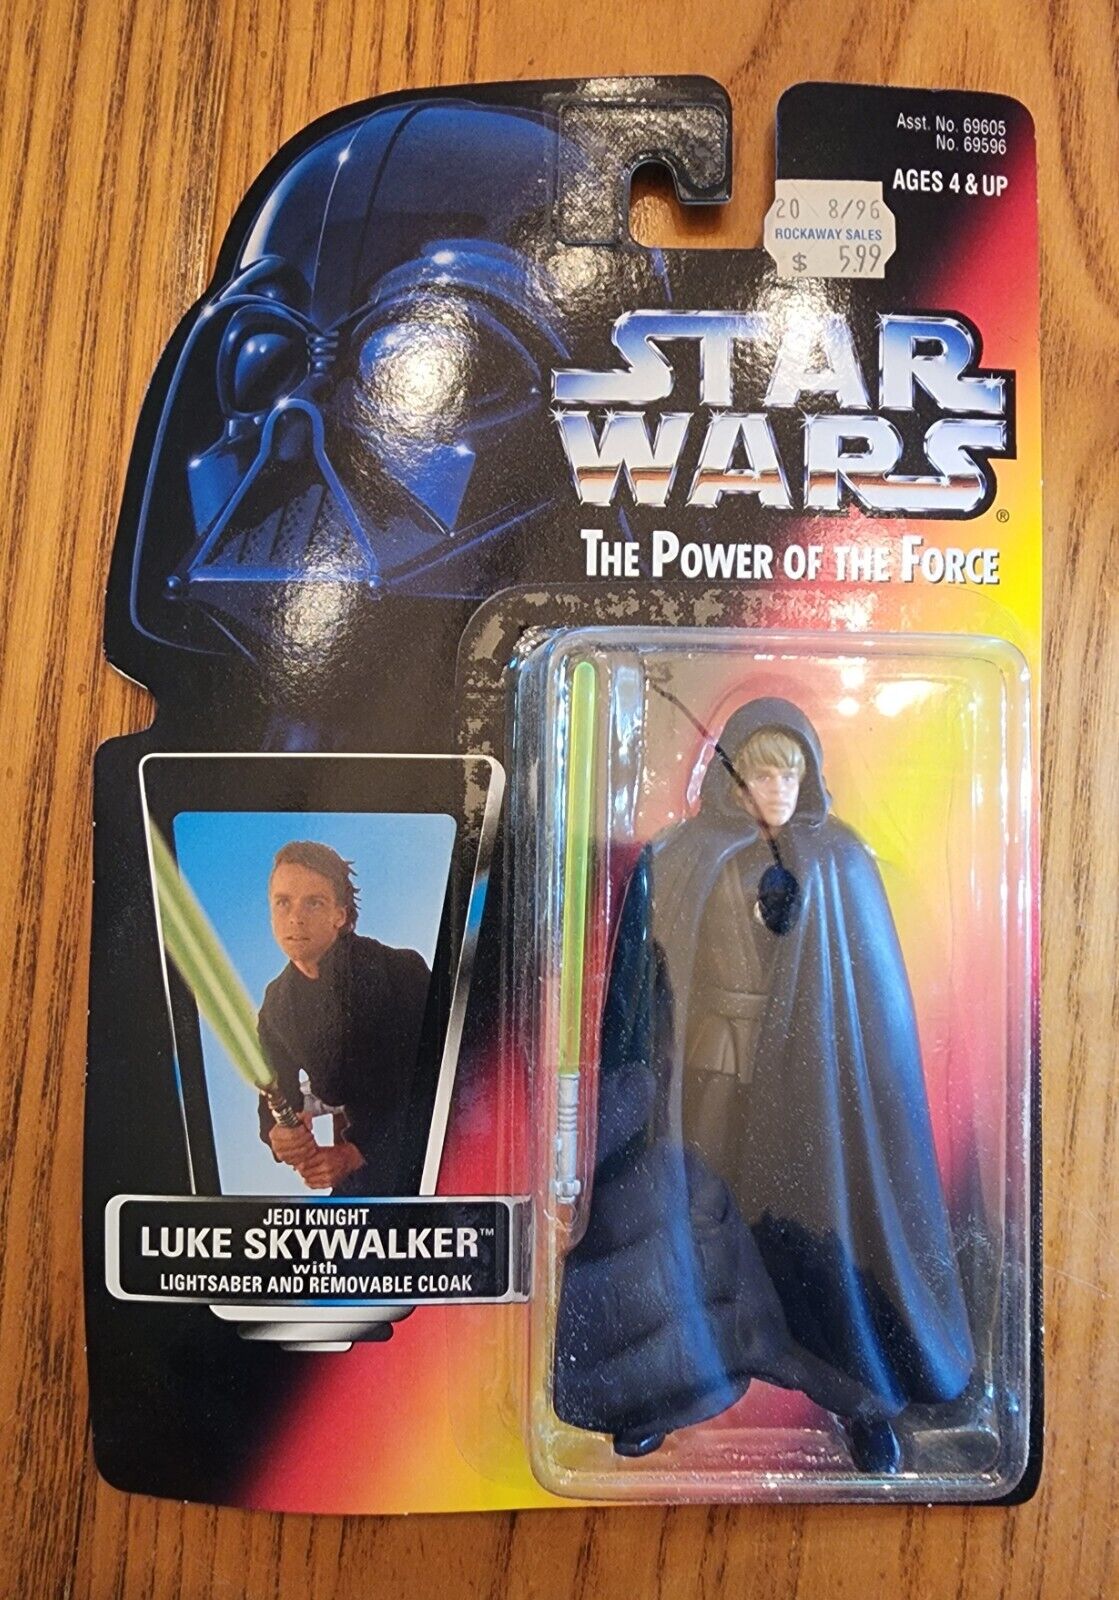 Star Wars 1997 Luke skywalker  figure unopened new cond. Power of the Force